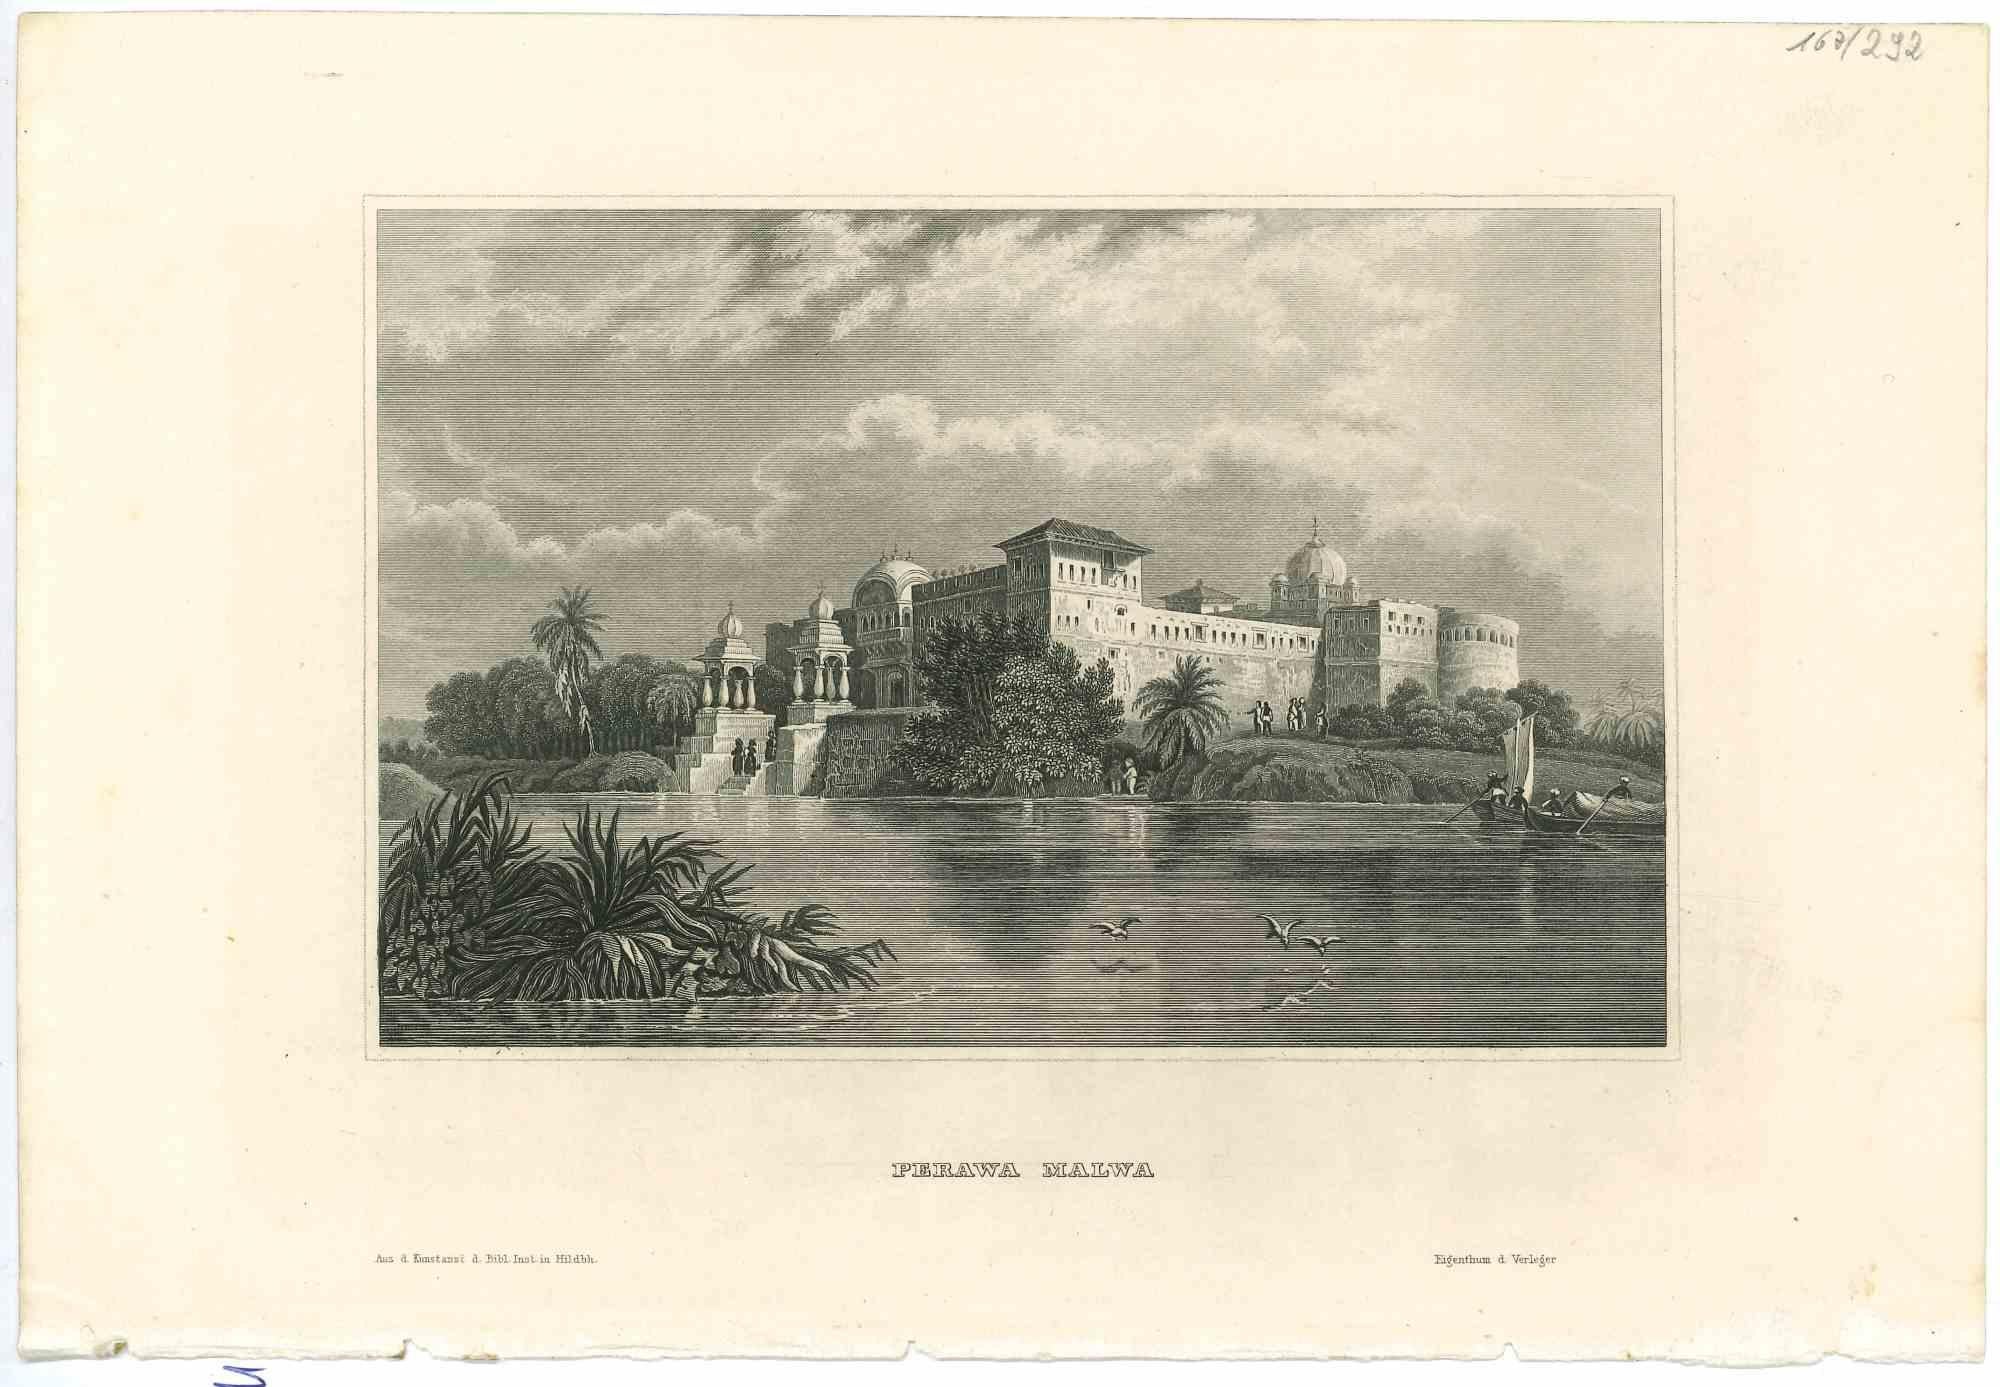 Unknown Landscape Print - Perawa Malwa - Original Lithograph - Mid 19th Century